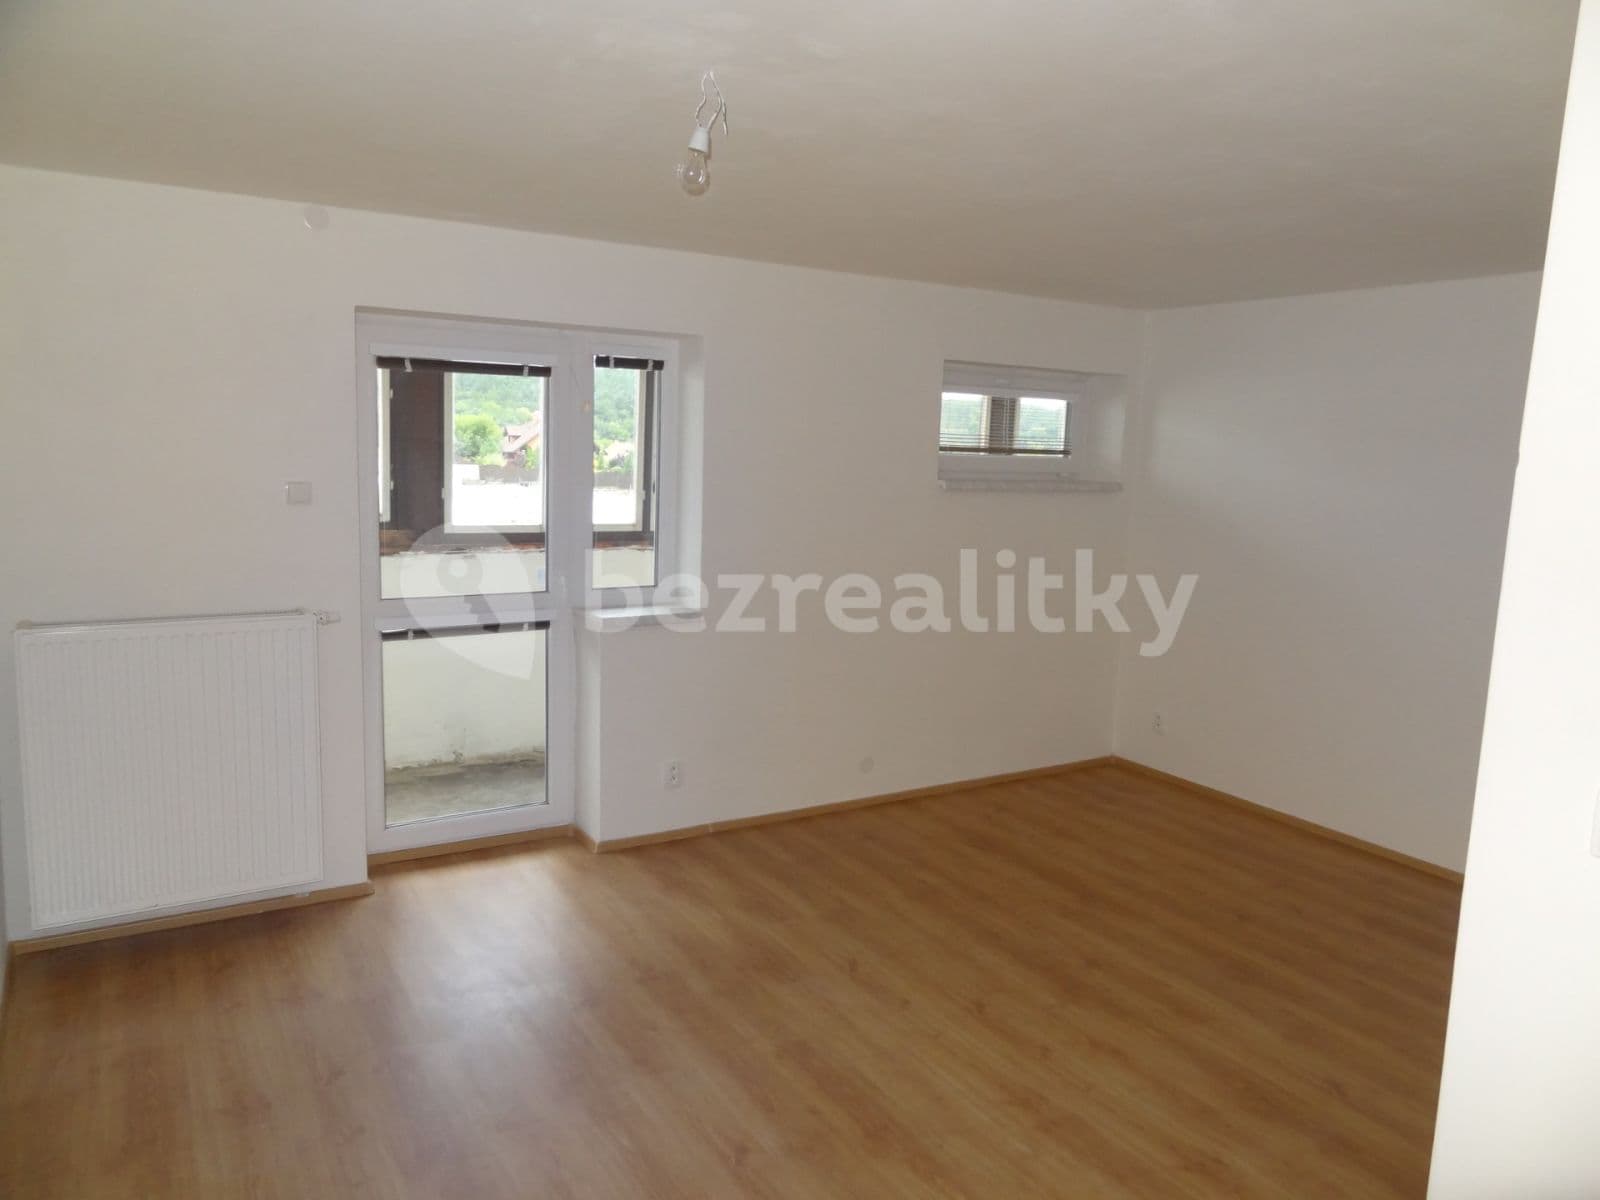 3 bedroom flat for sale, 86 m², Smetanovo náměstí, Adamov, Jihomoravský Region